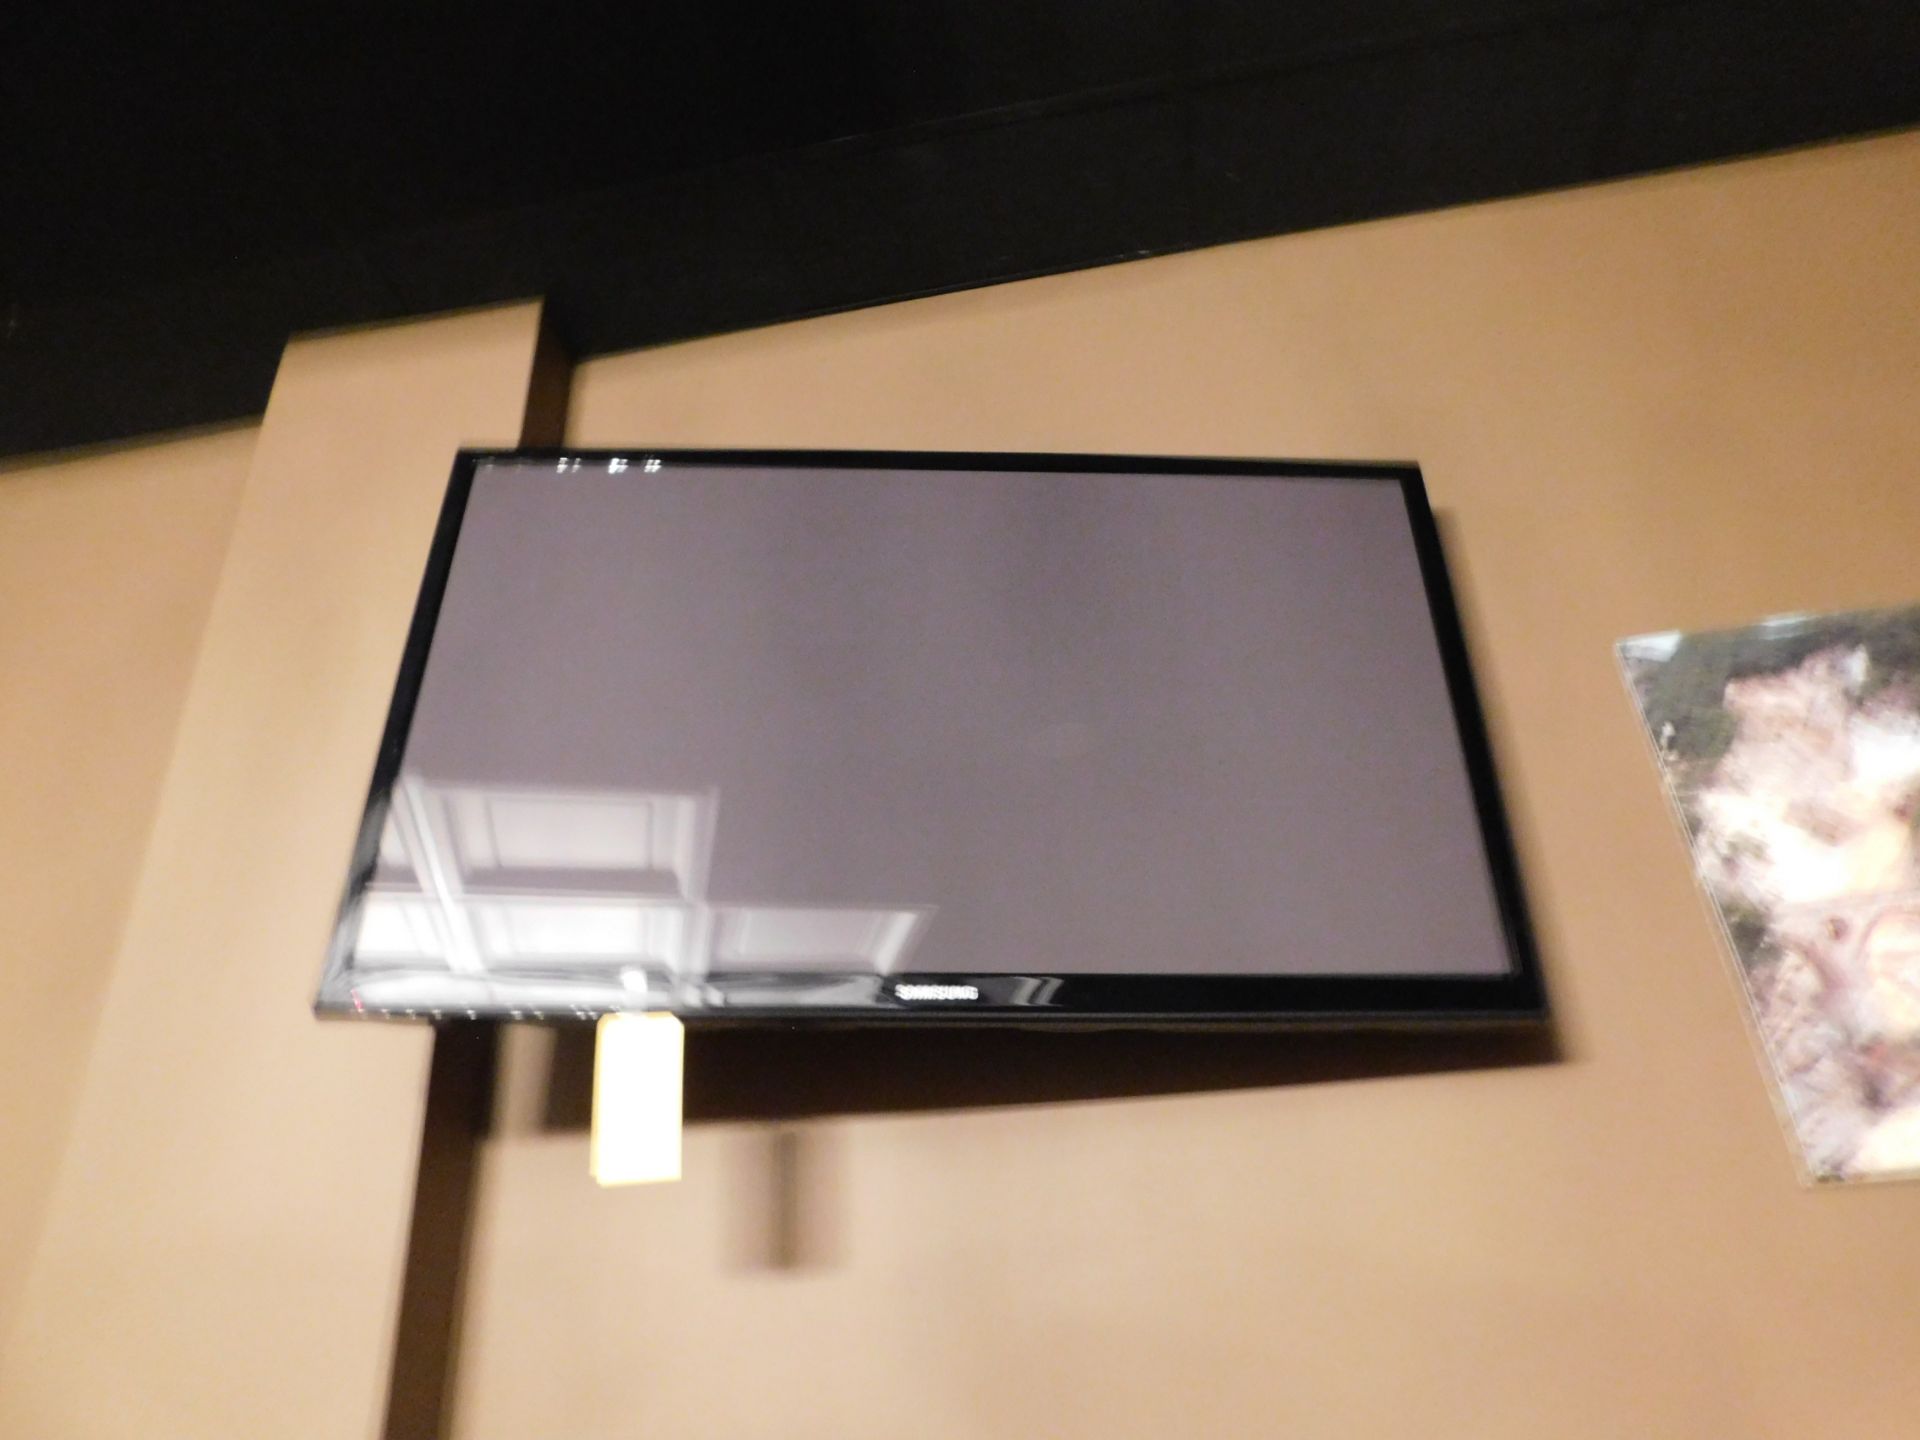 Samsung 44" Flat Screen TV